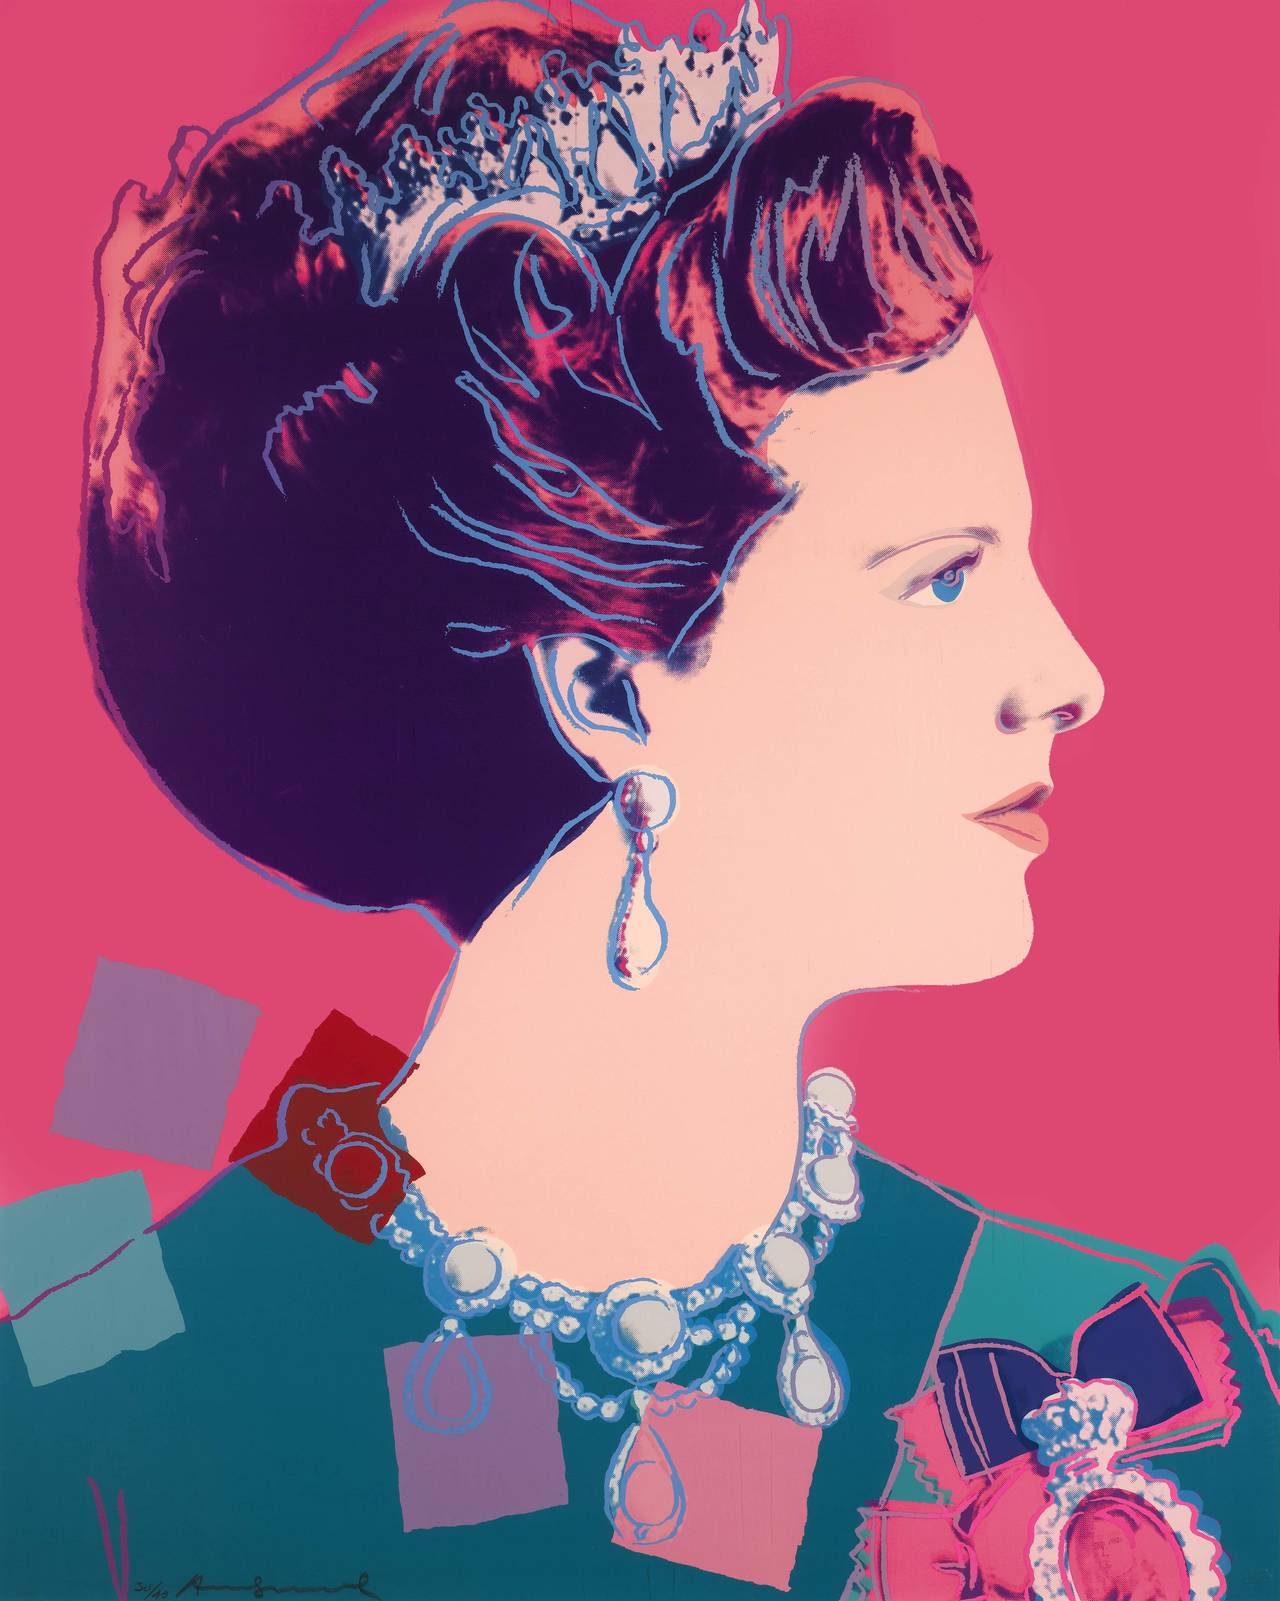 Andy Warhol Portrait Print - Reigning Queens, Queen Margrethe II of Denmark